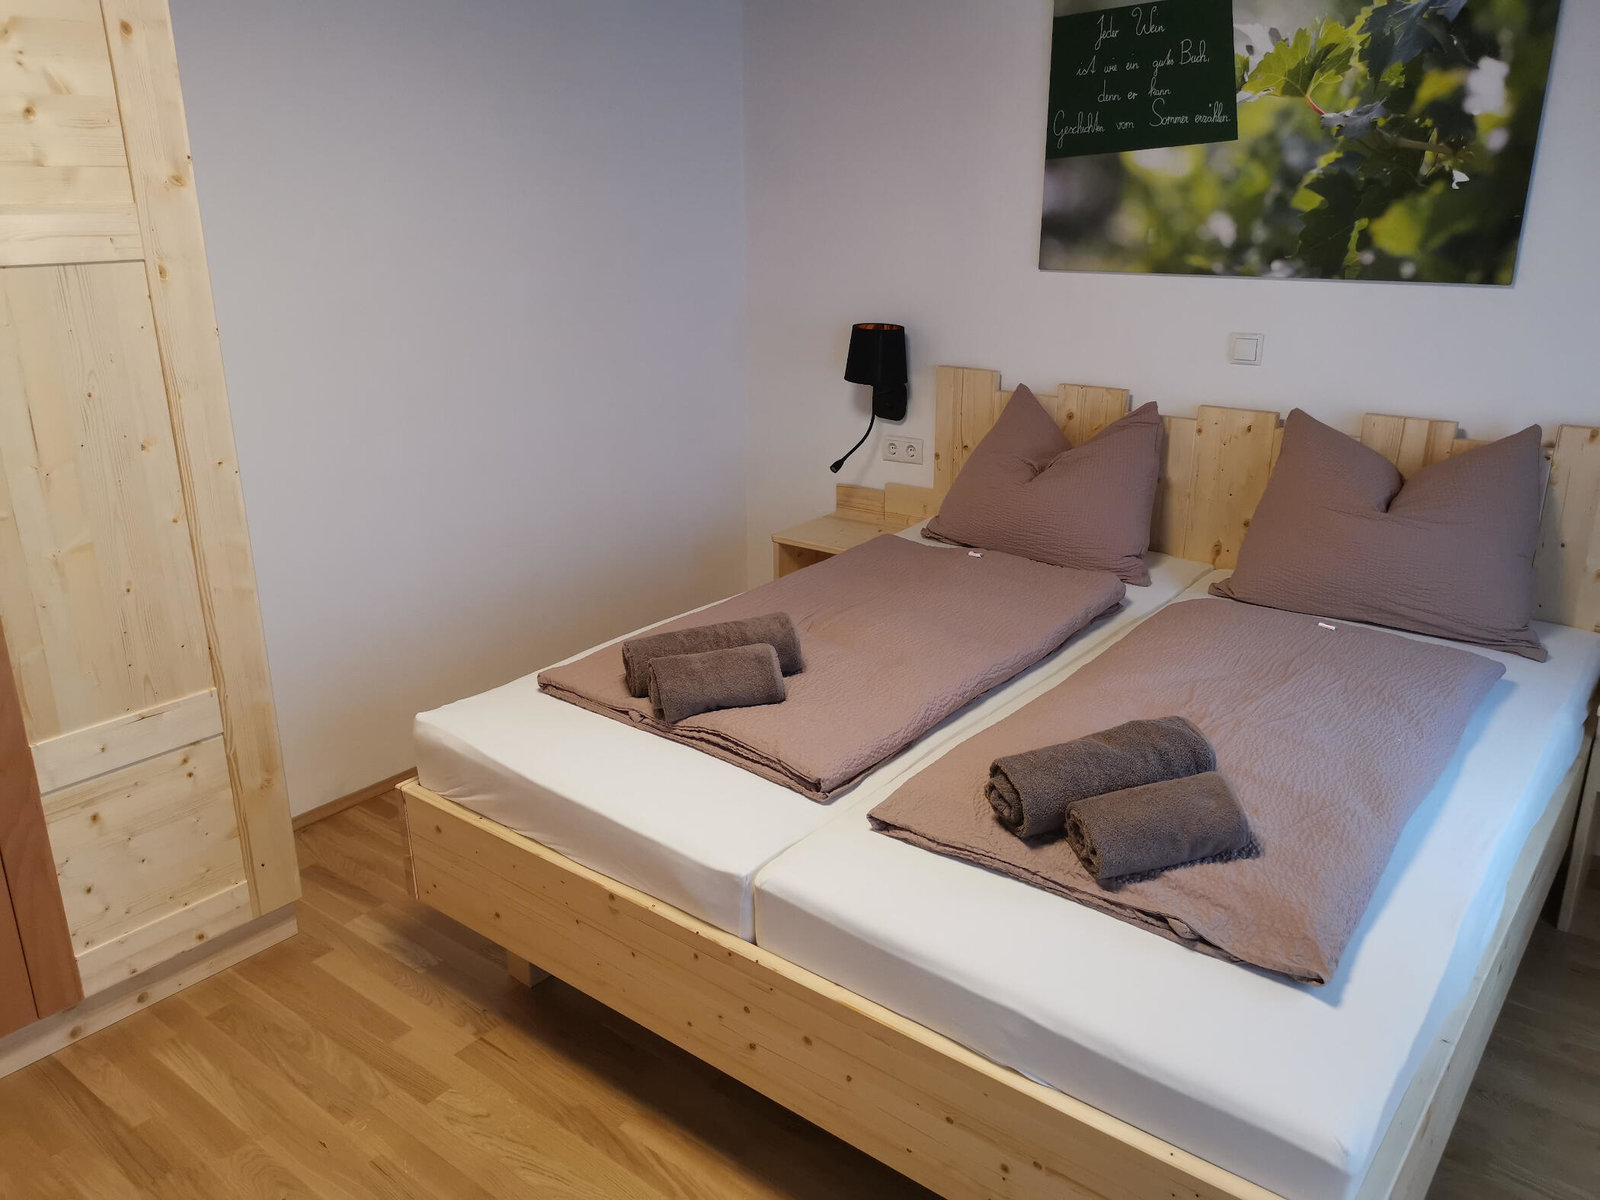 Doppelbett aus Holz